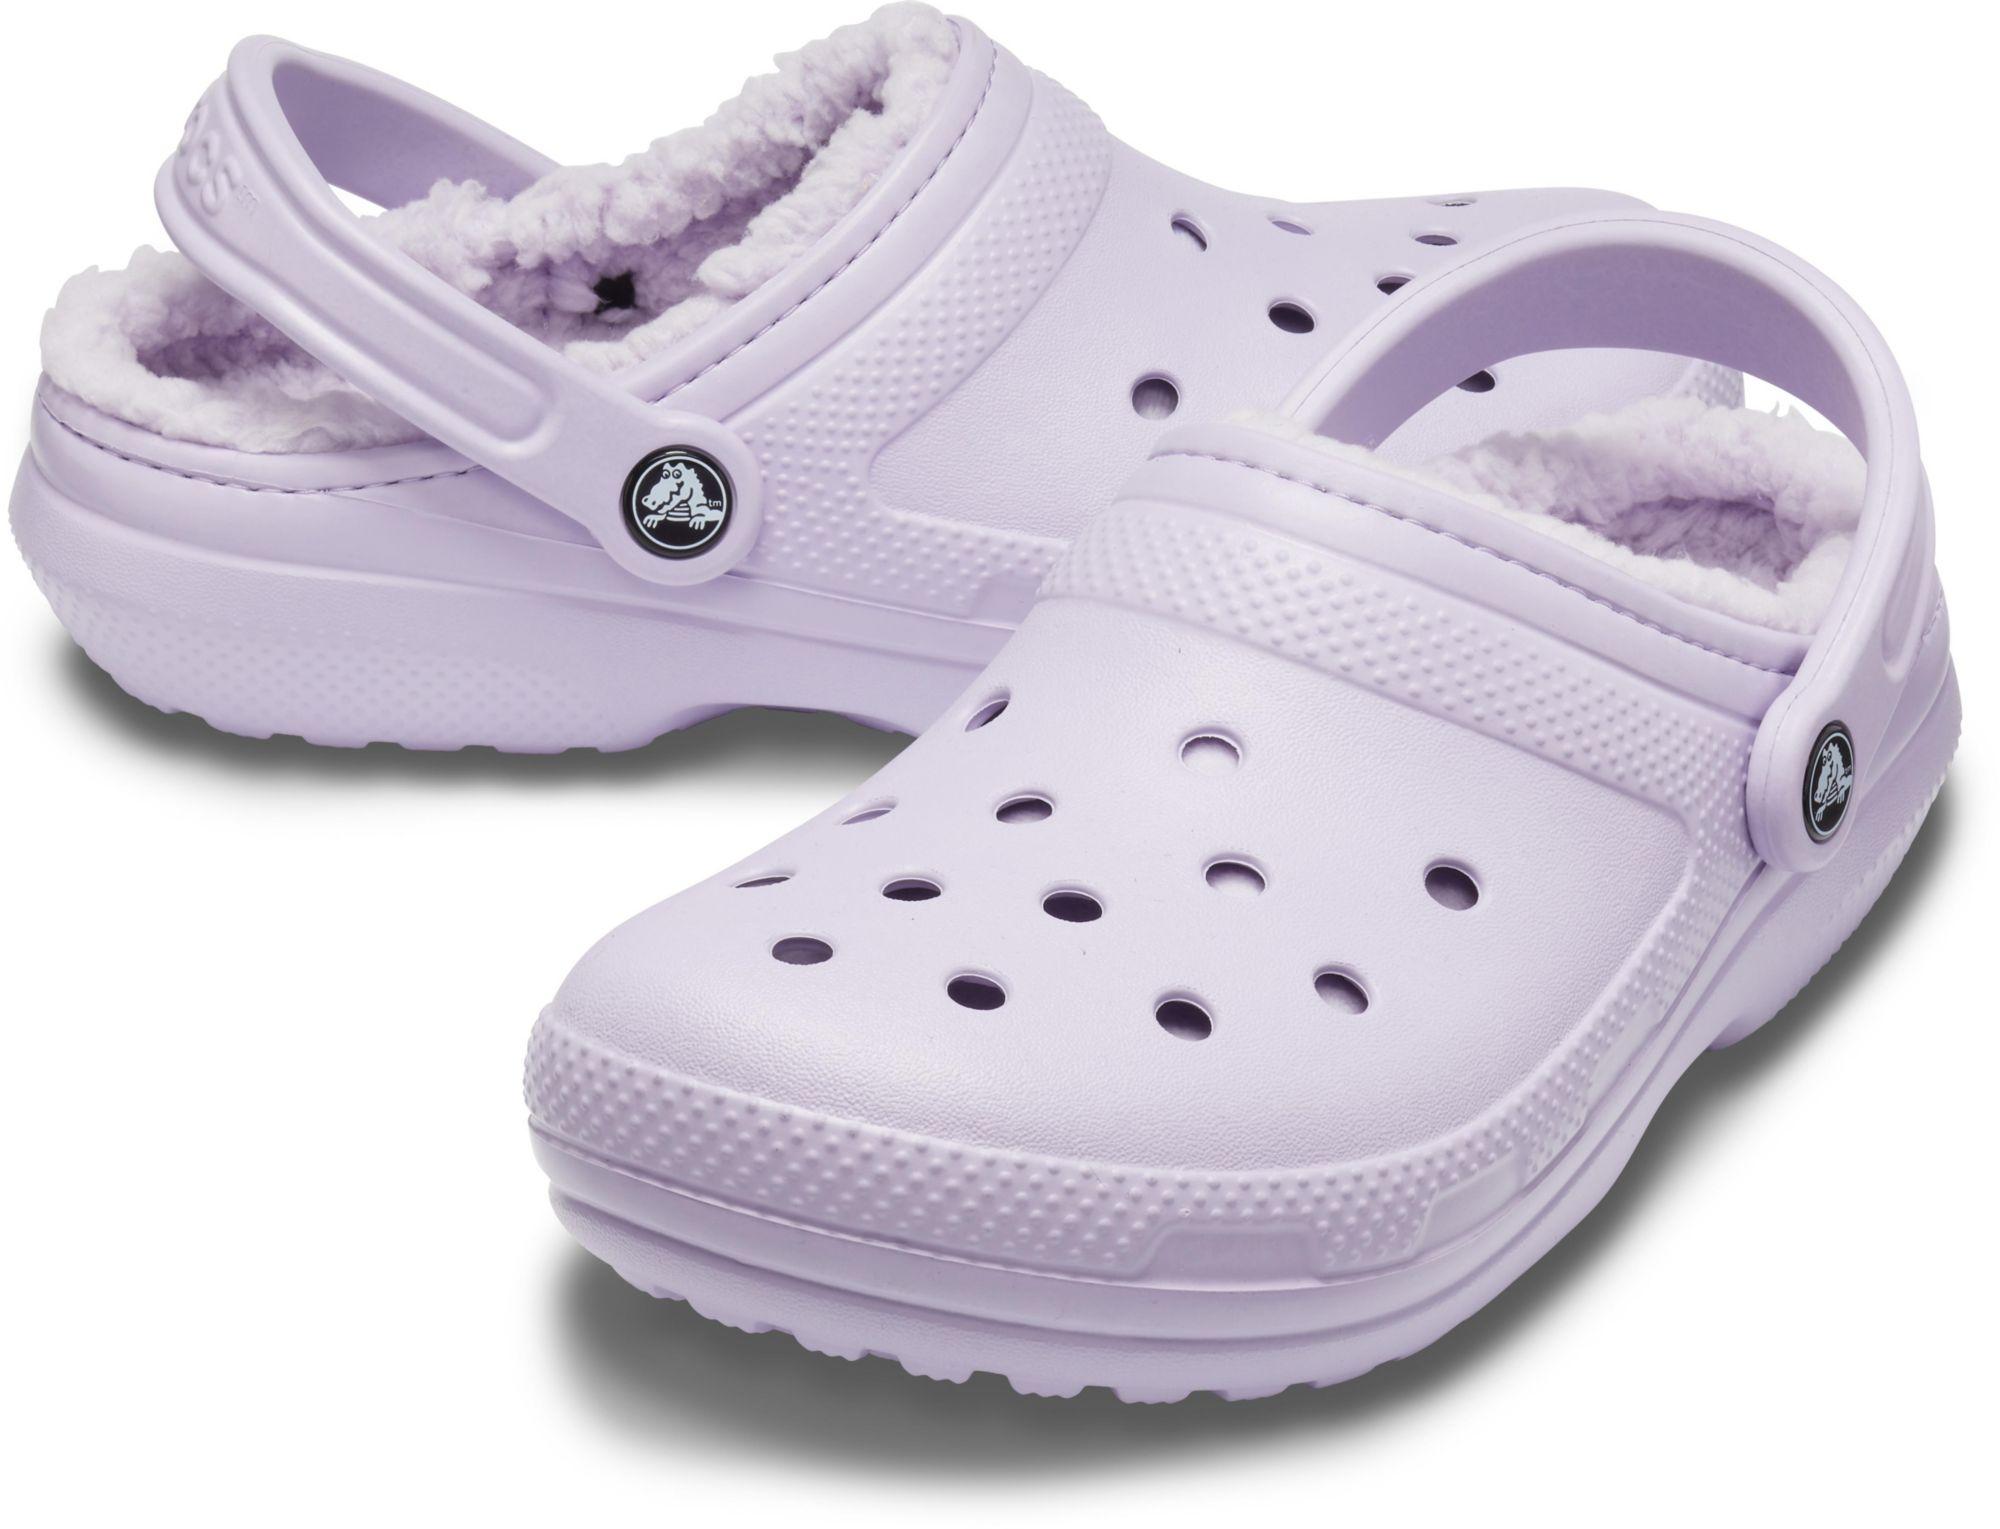 purple crocs with fur womens